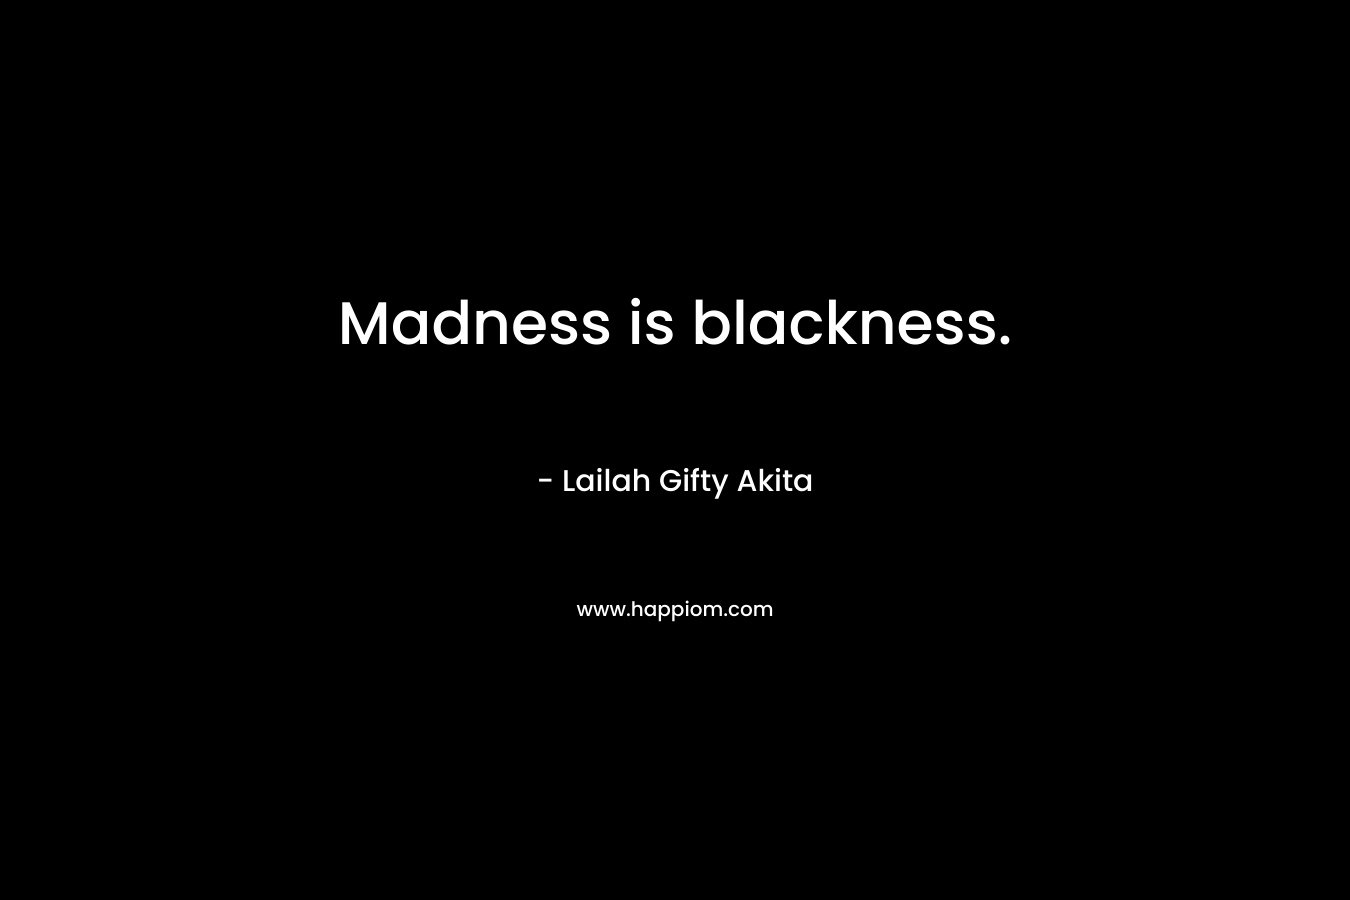 Madness is blackness.